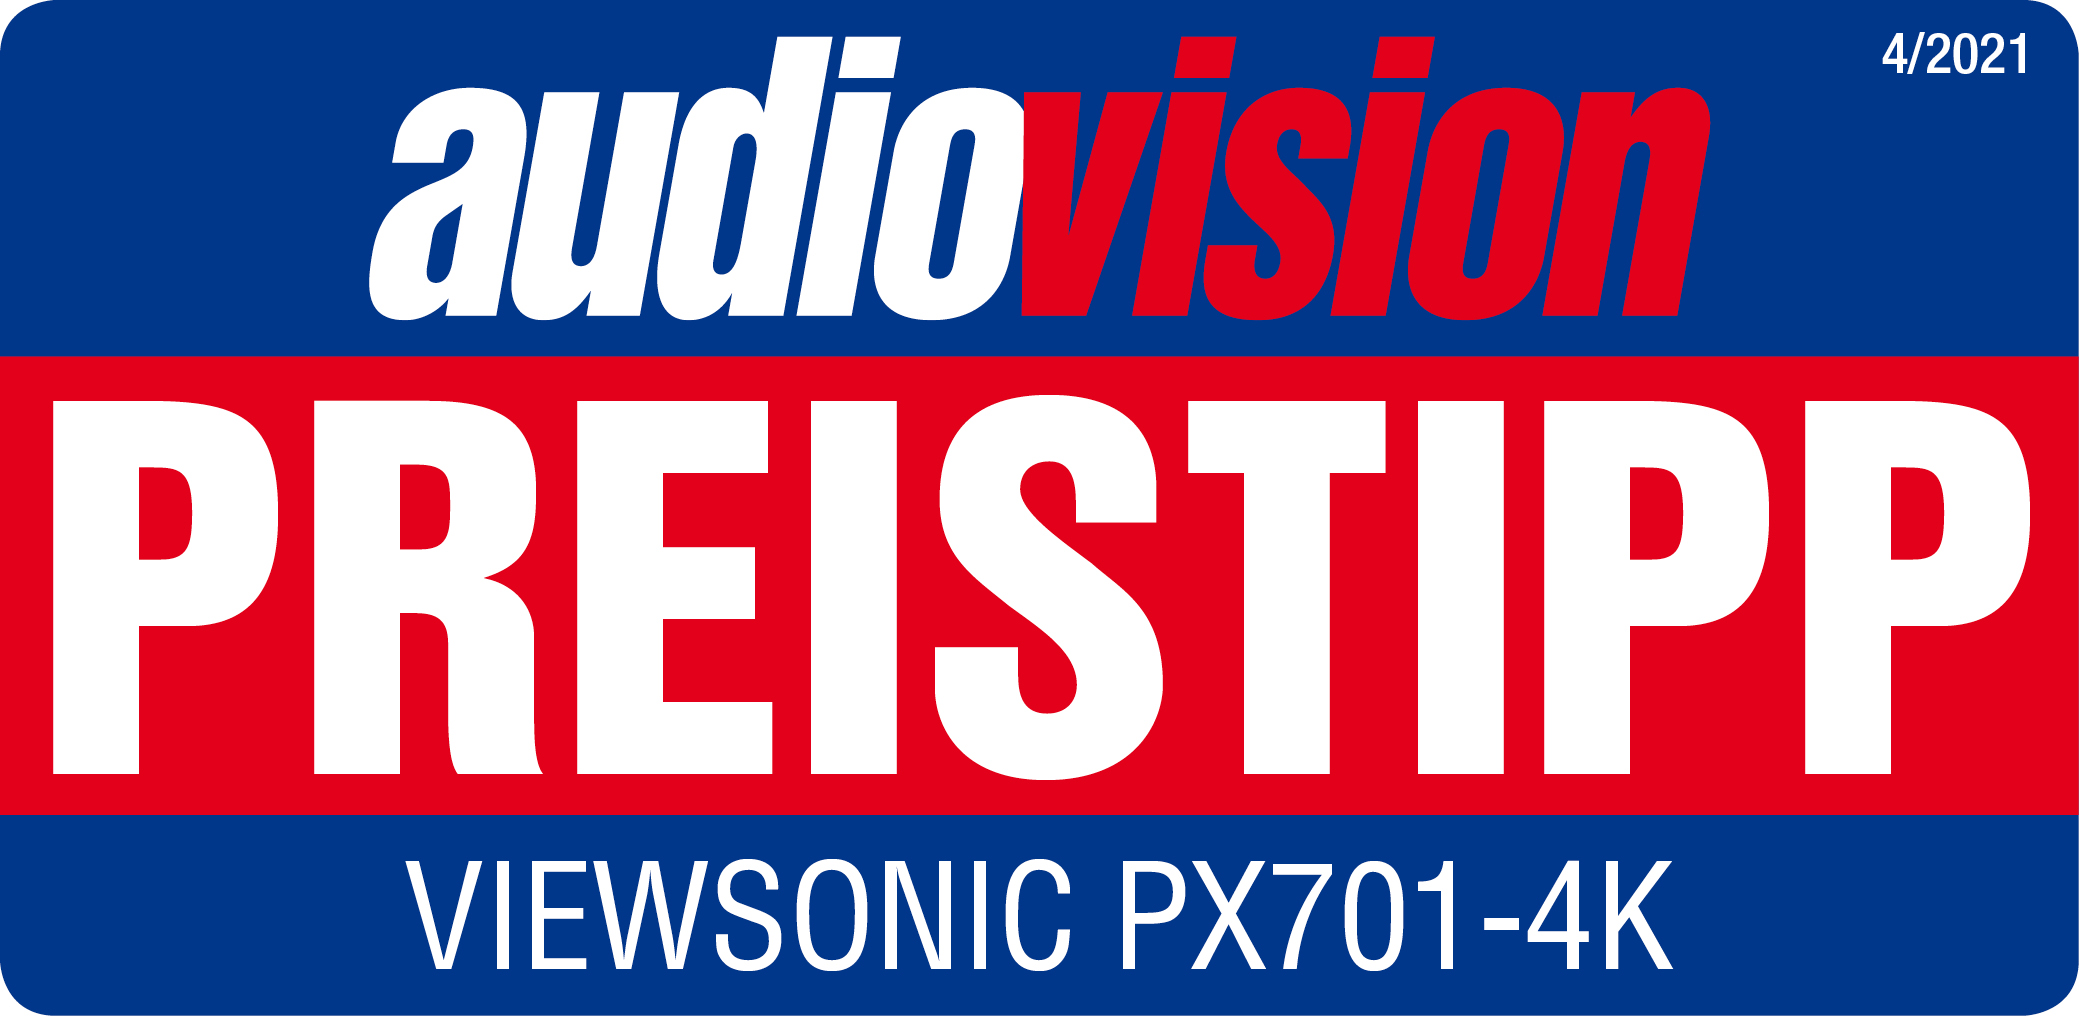 audiovision Preistipp